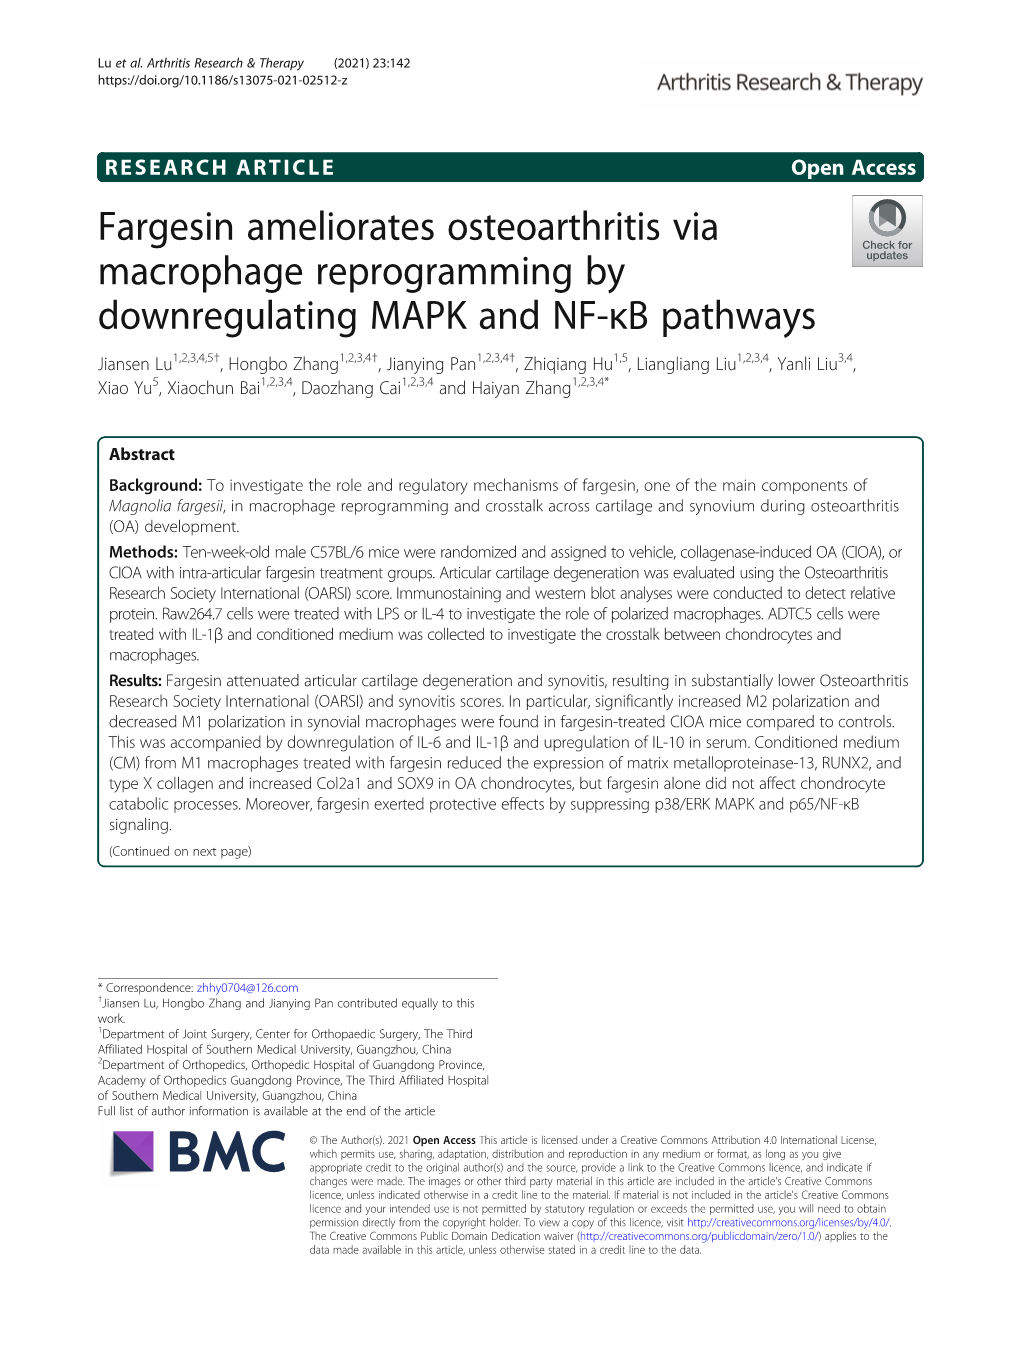 Fargesin Ameliorates Osteoarthritis Via Macrophage Reprogramming By